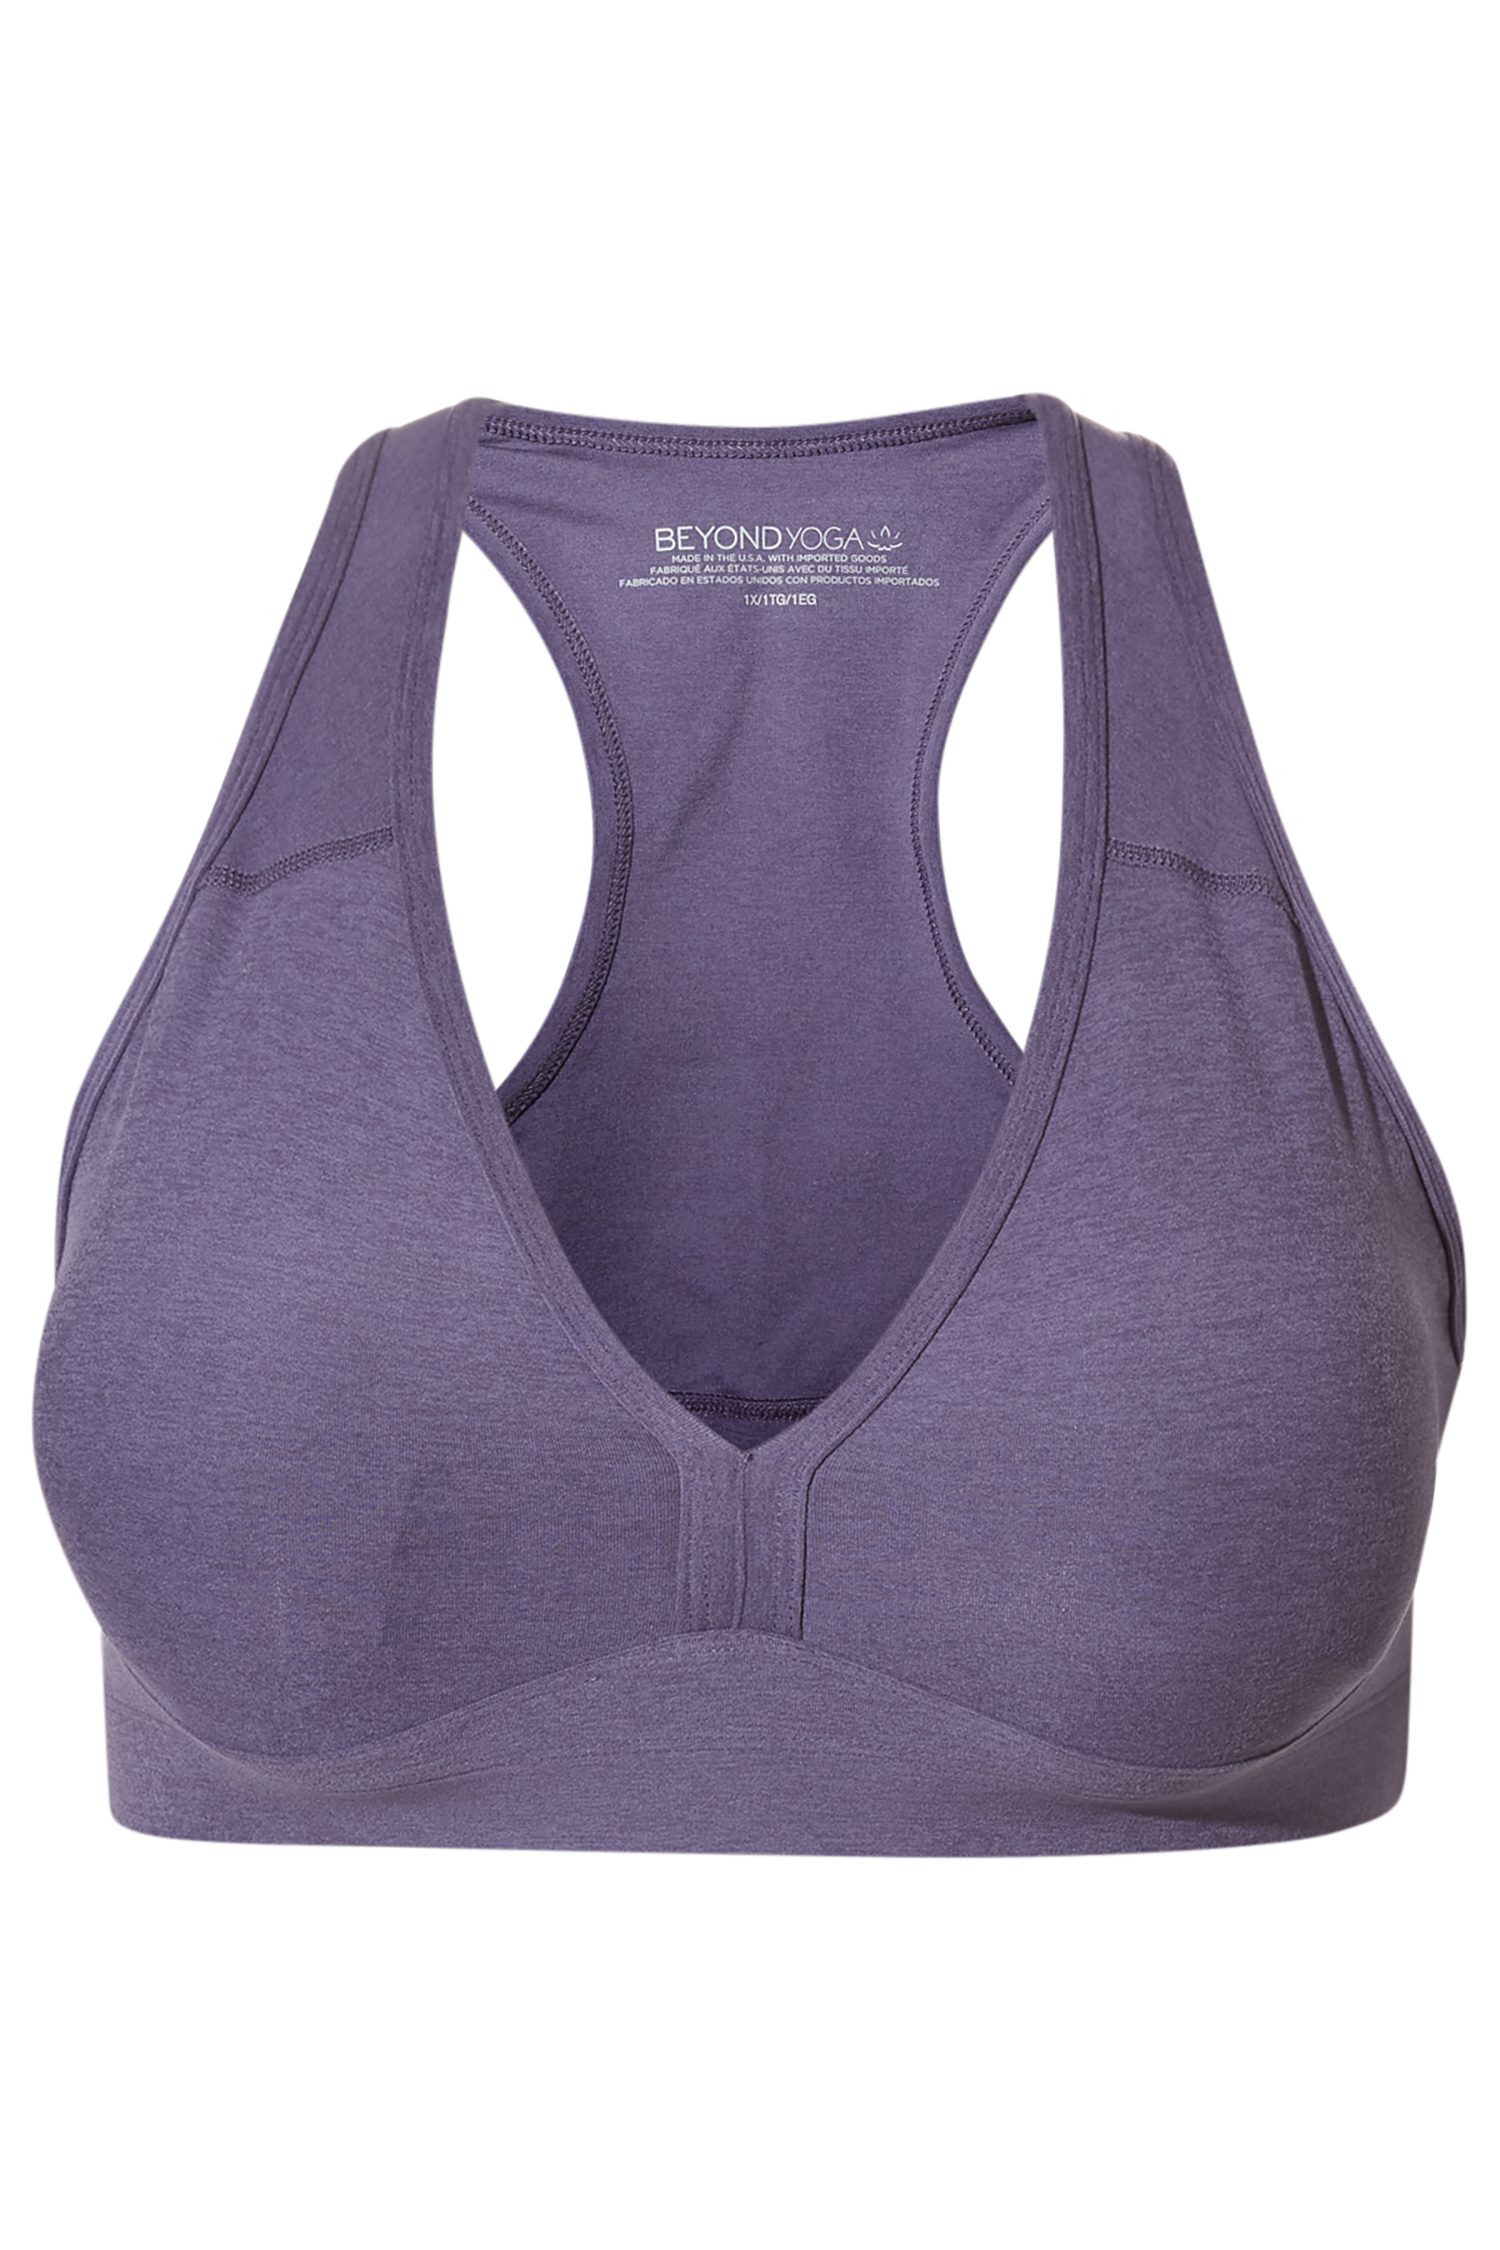 Ultra-soft V-neck bra, Beyond Yoga